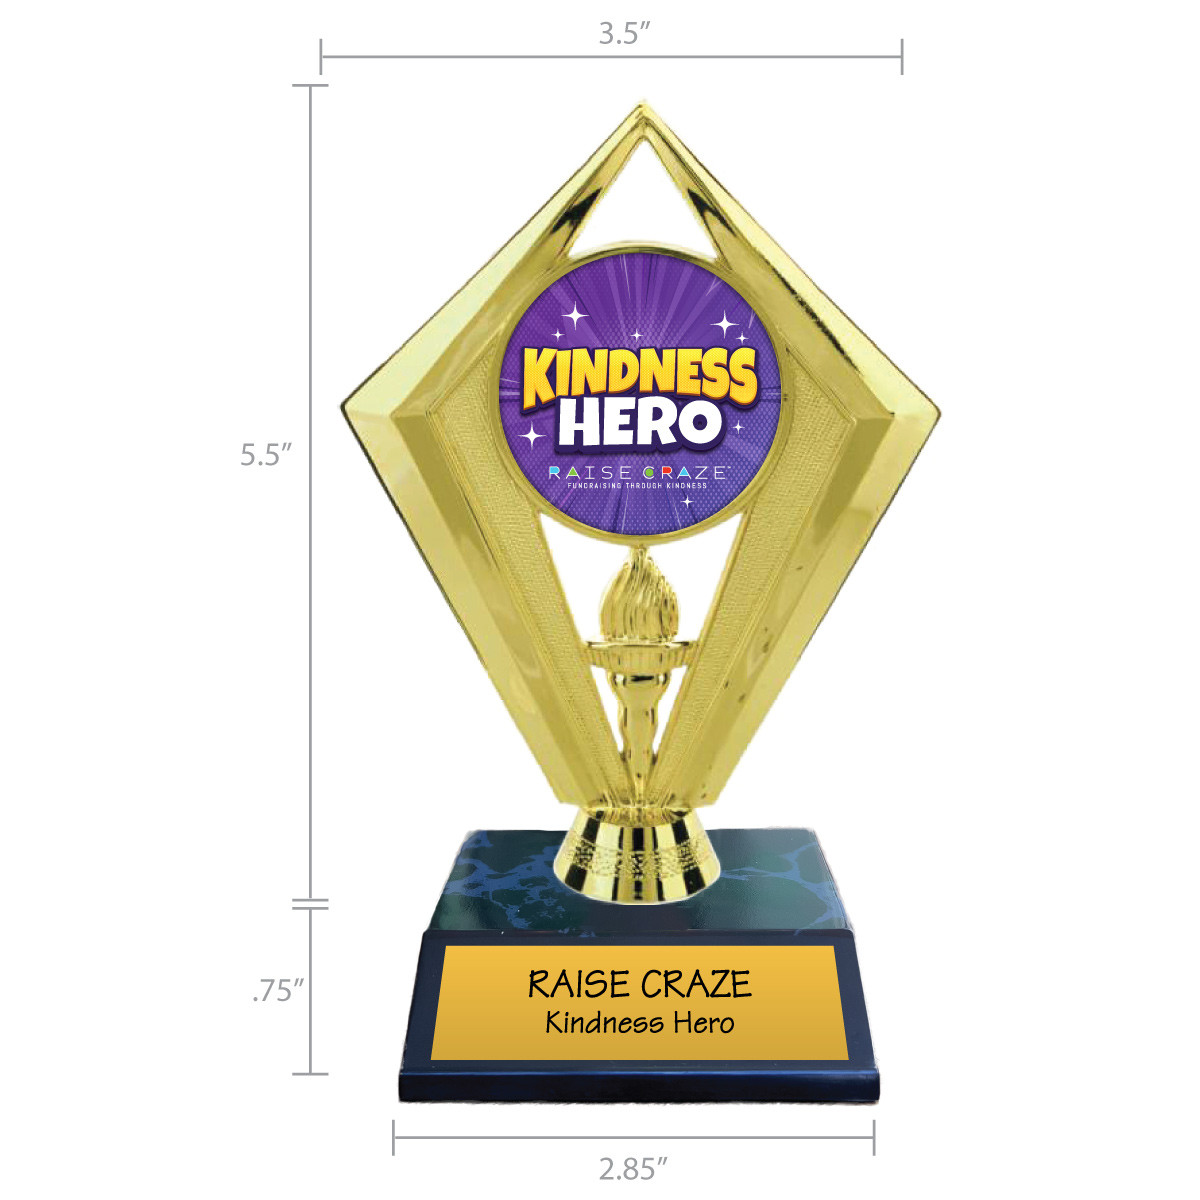 Raise Craze Trophy - Kindness Hero